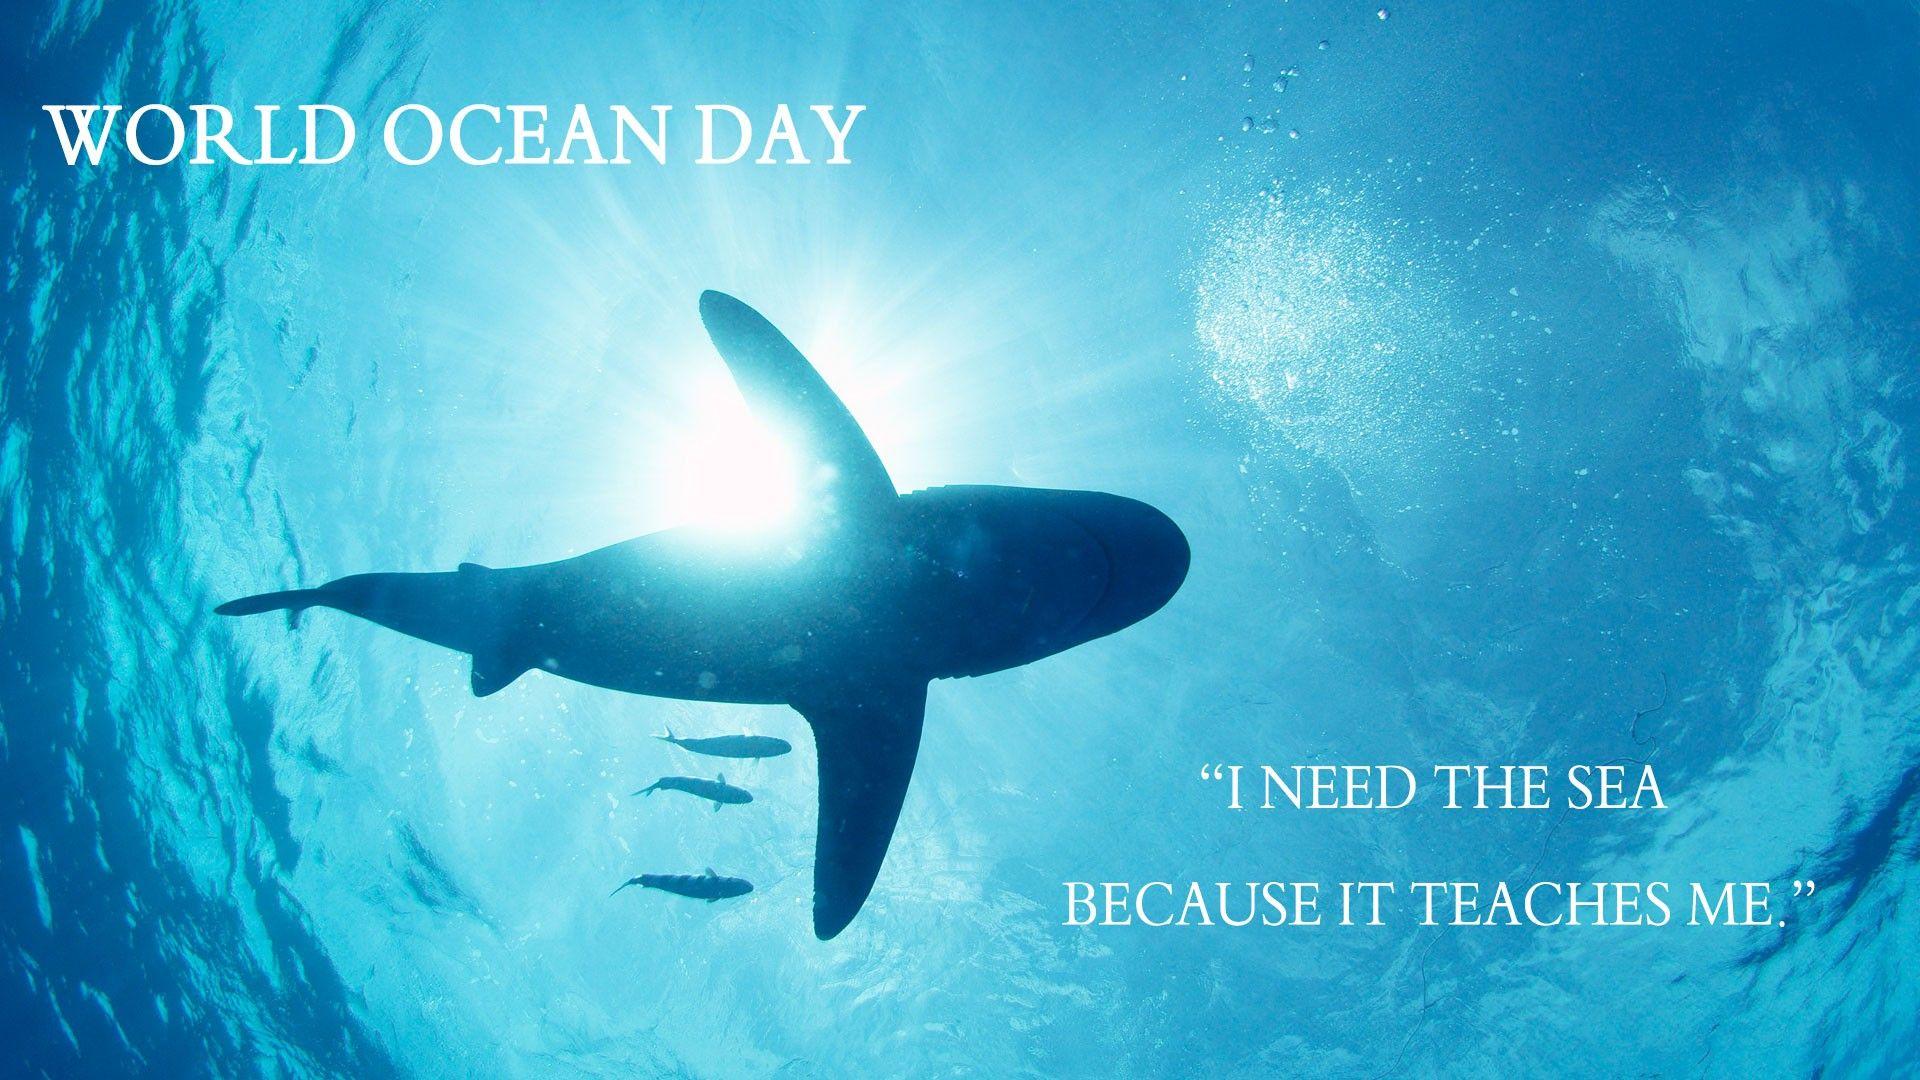 World Oceans Day Wallpaper